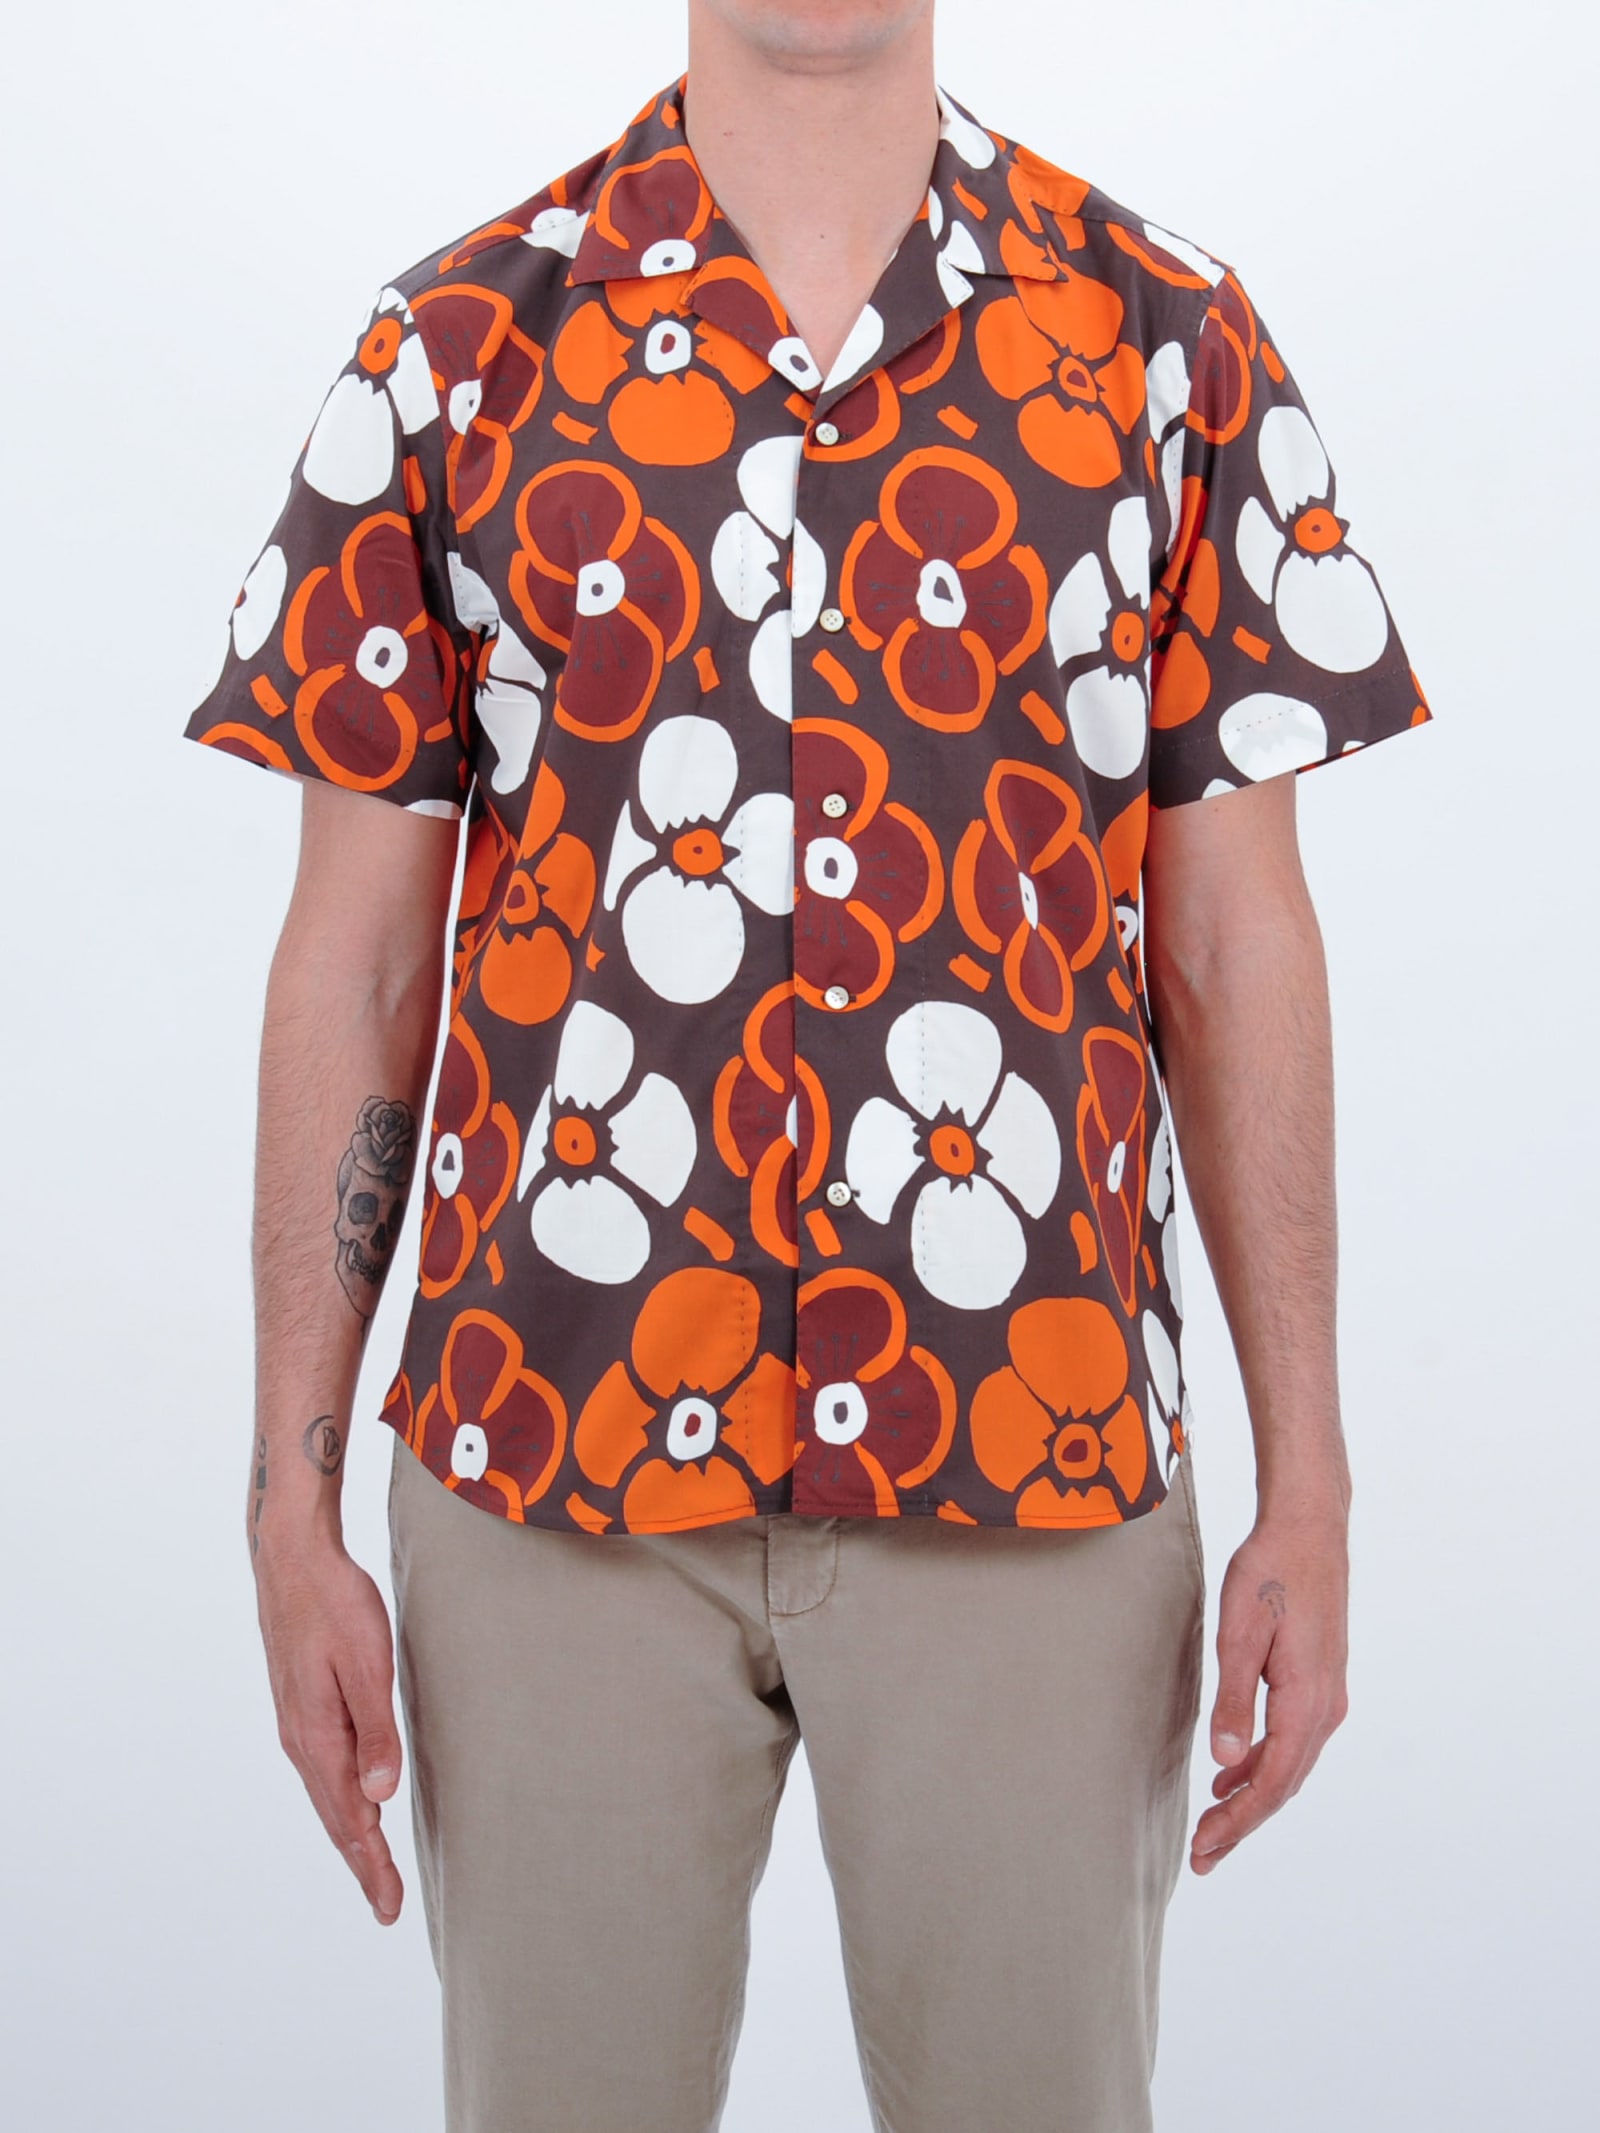 Guglielminotti Men's Orange Other Materials Shirt